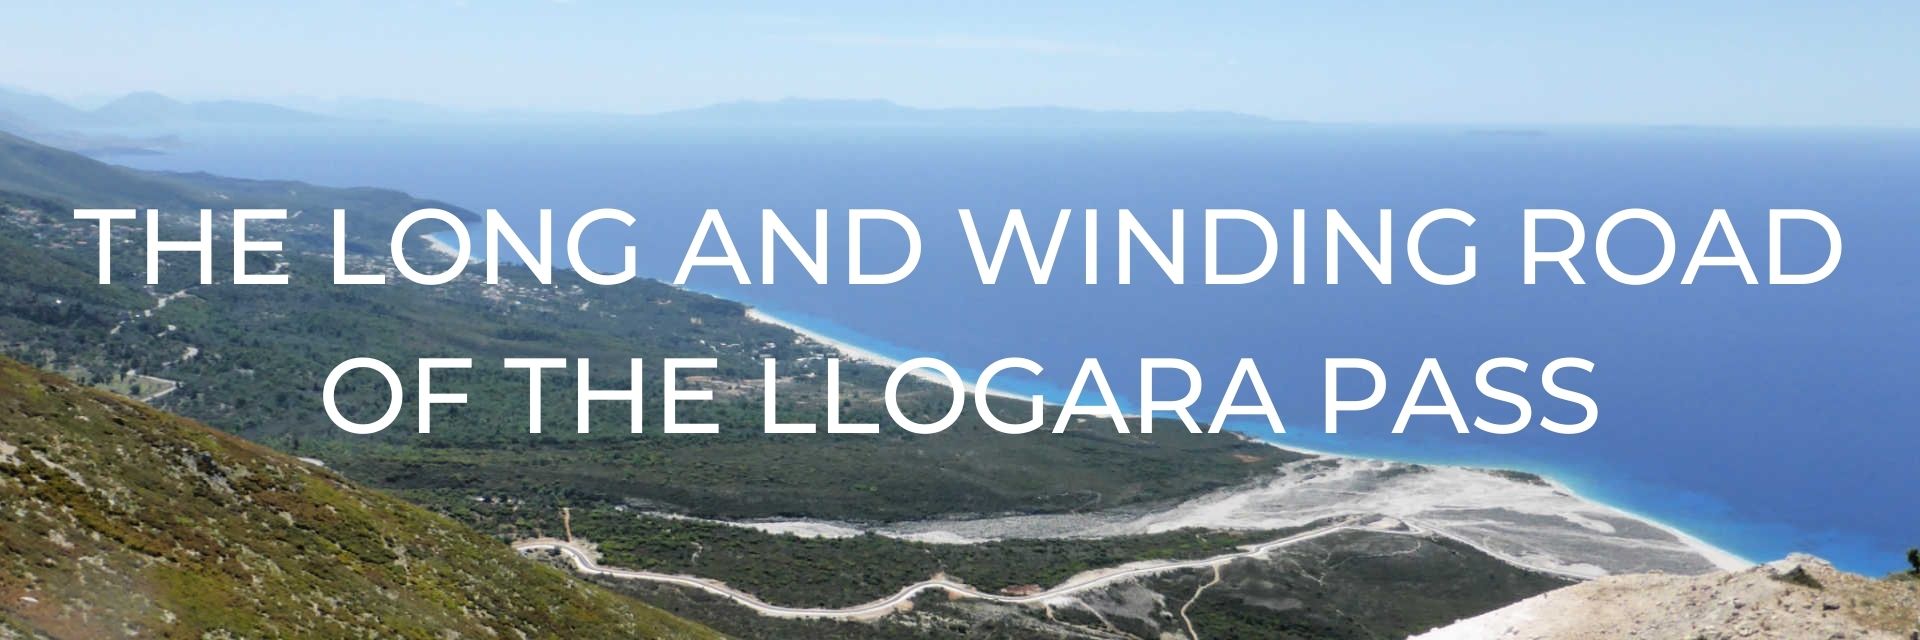 Llogara Pass - The Long and Winding Road from Vlora to Saranda, Albania Desktop Header